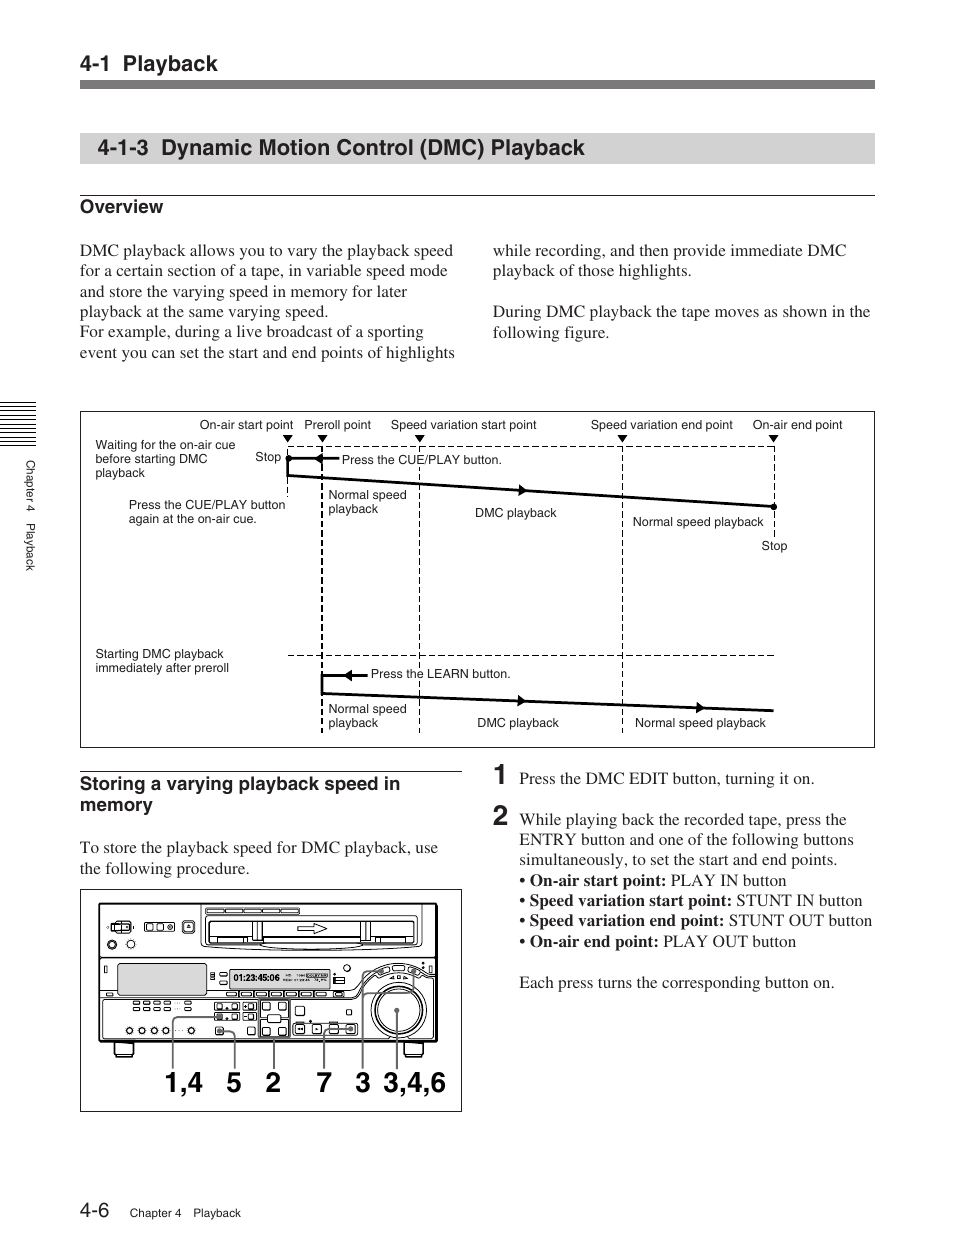 1-3 dynamic motion control (dmc) playback, 1 playback | Sony HDW-M2100 User Manual | Page 39 / 115